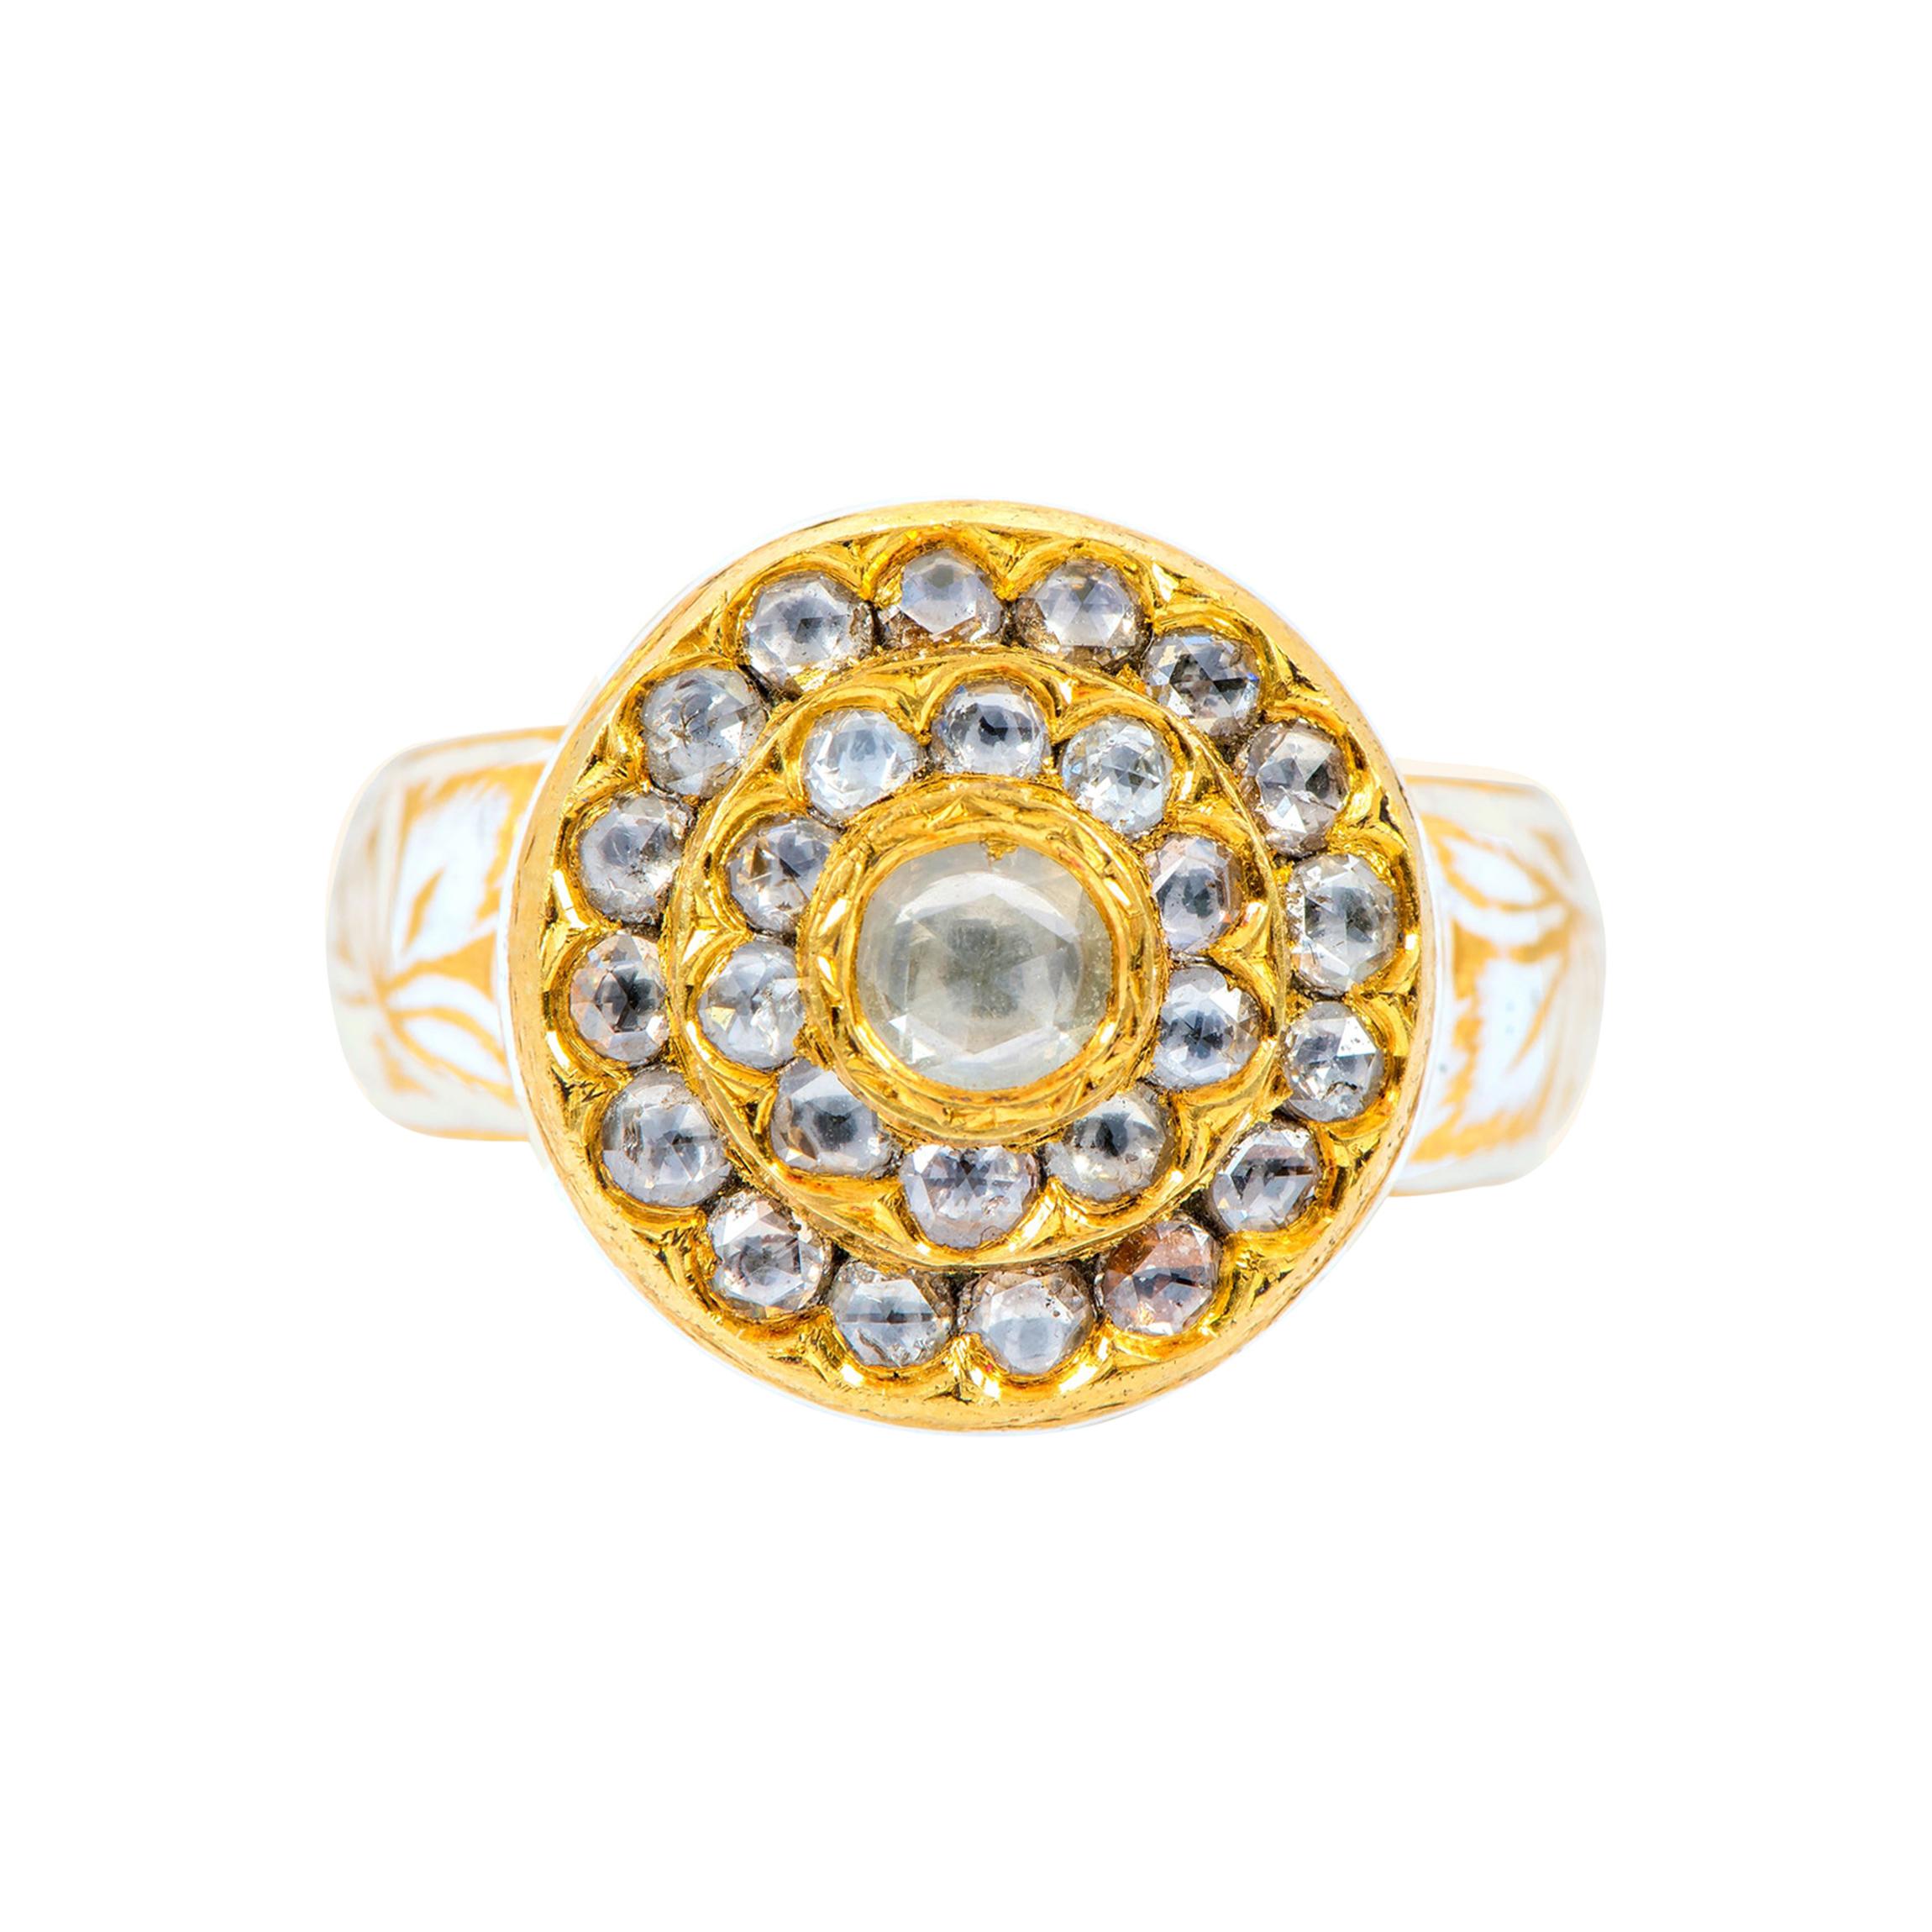 22 Karat Gold Rose-Cut Diamond Ring Handcrafted with White Enamel Work 